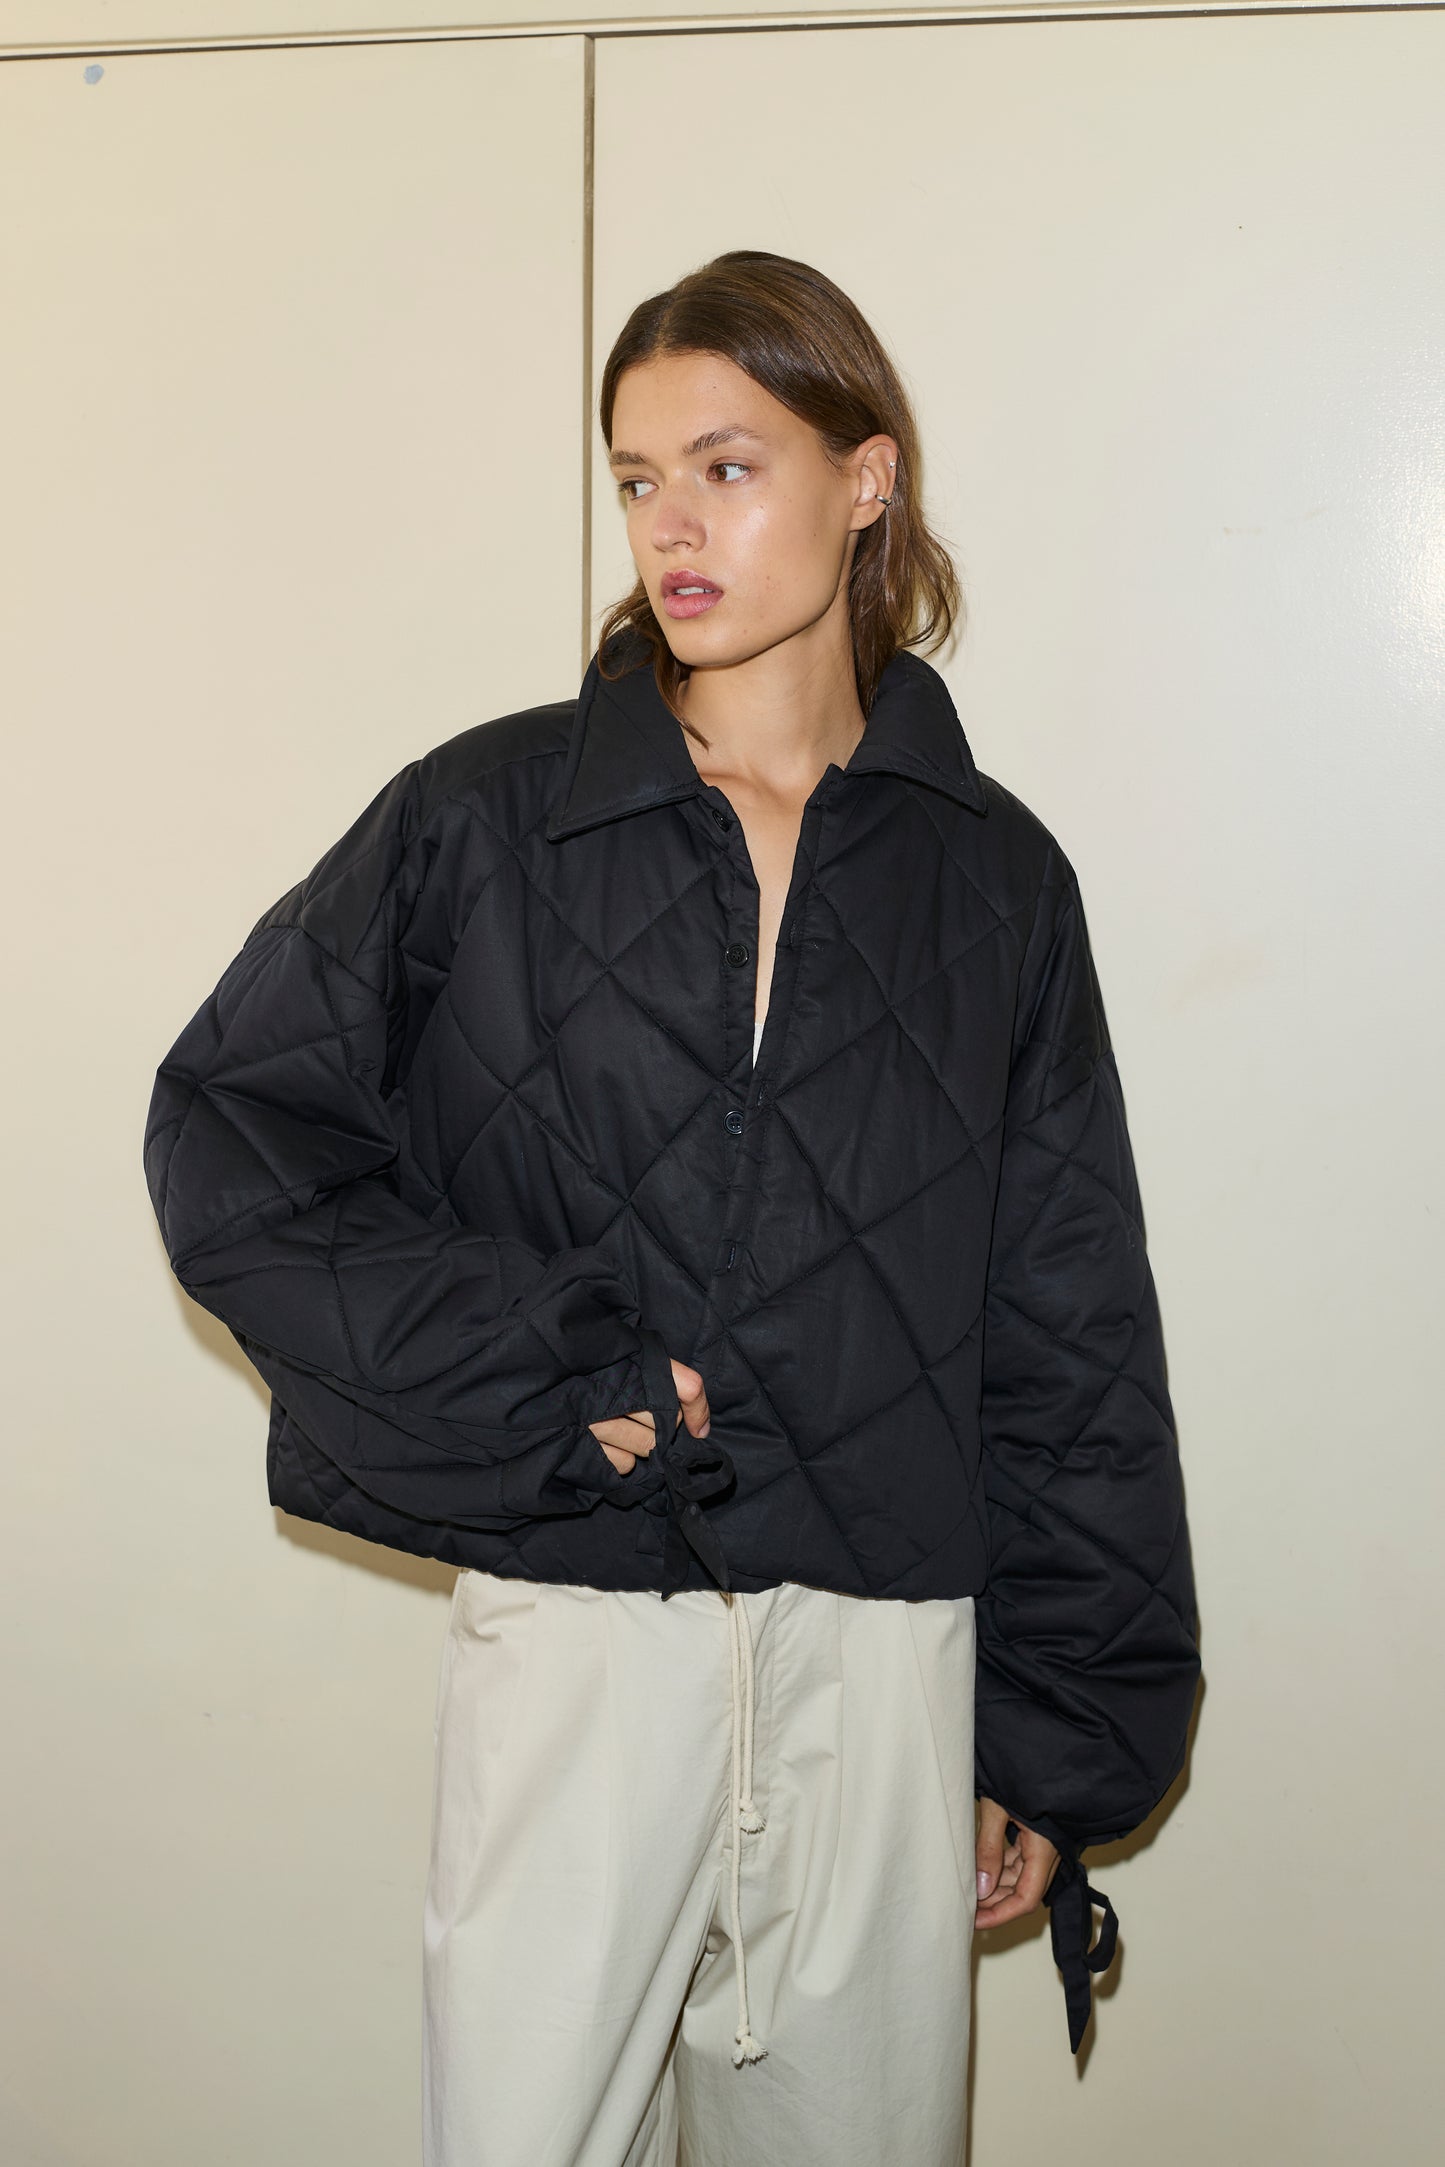 Female model wearing The Collared Quilt Coat - Black by Deiji Studios against plain background